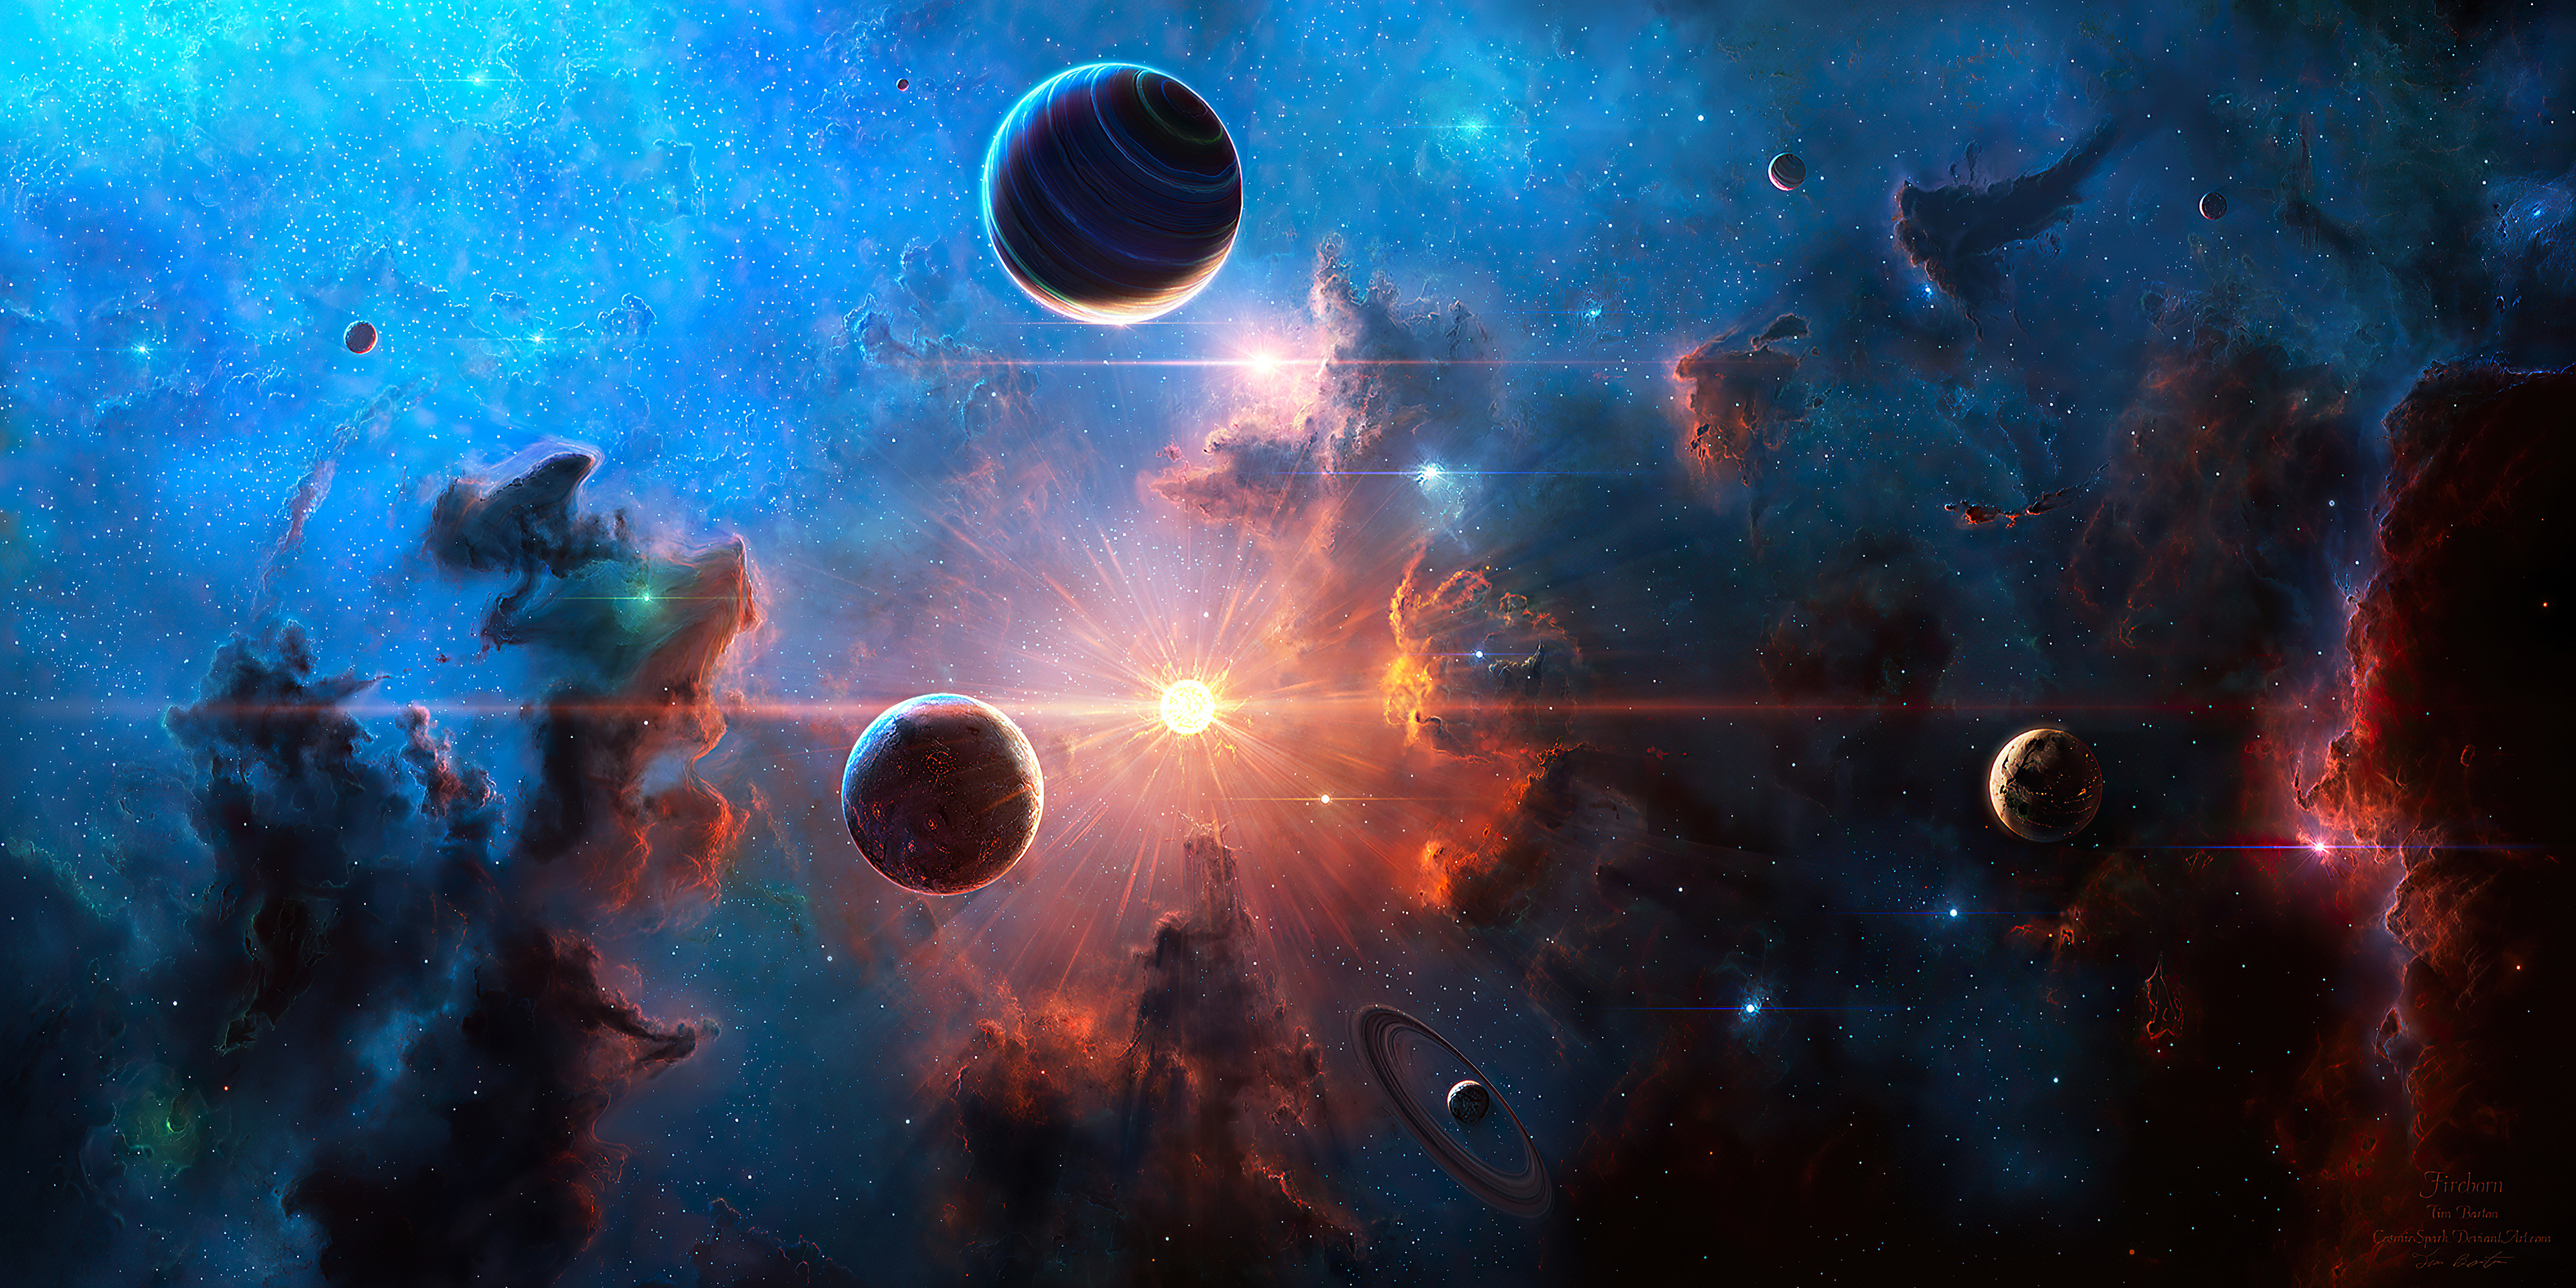 Neblua Space Planet Art 4k, HD Digital Universe, 4k Wallpapers, Images